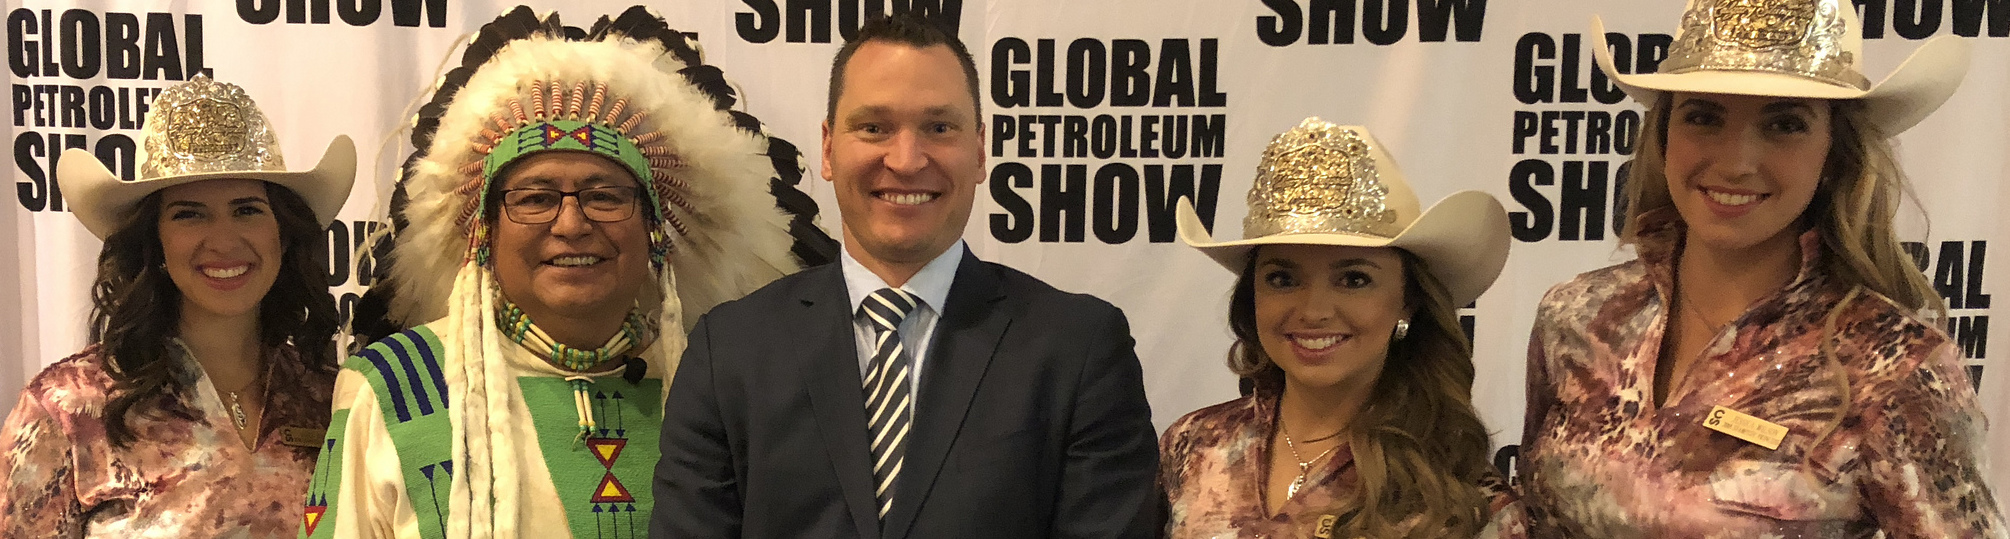 global petroleum show